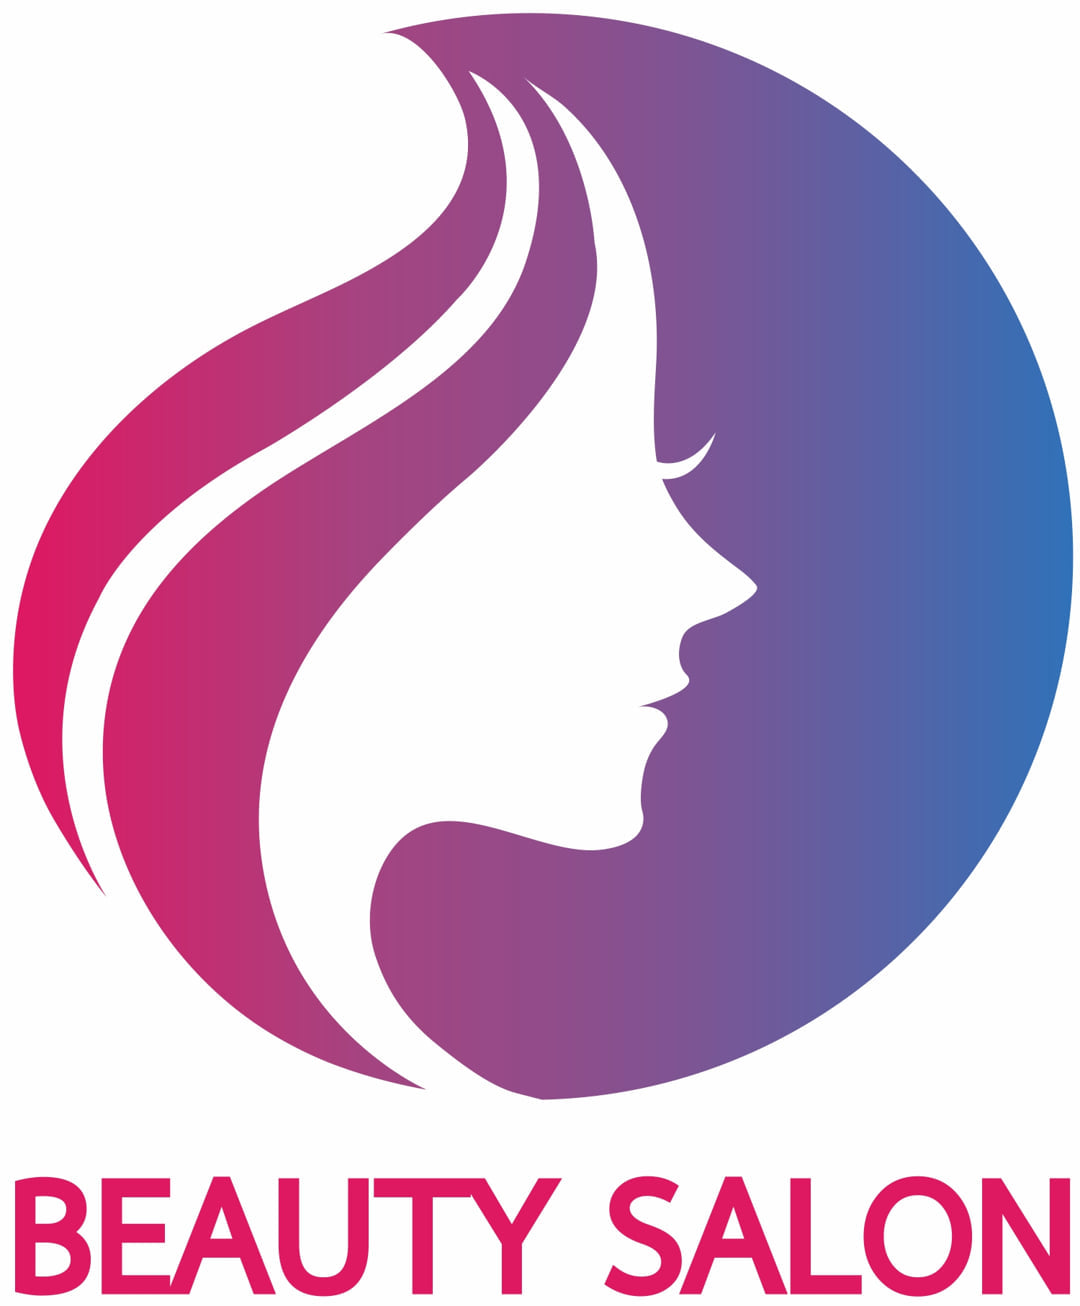 Beauty Salon Wall Sticker